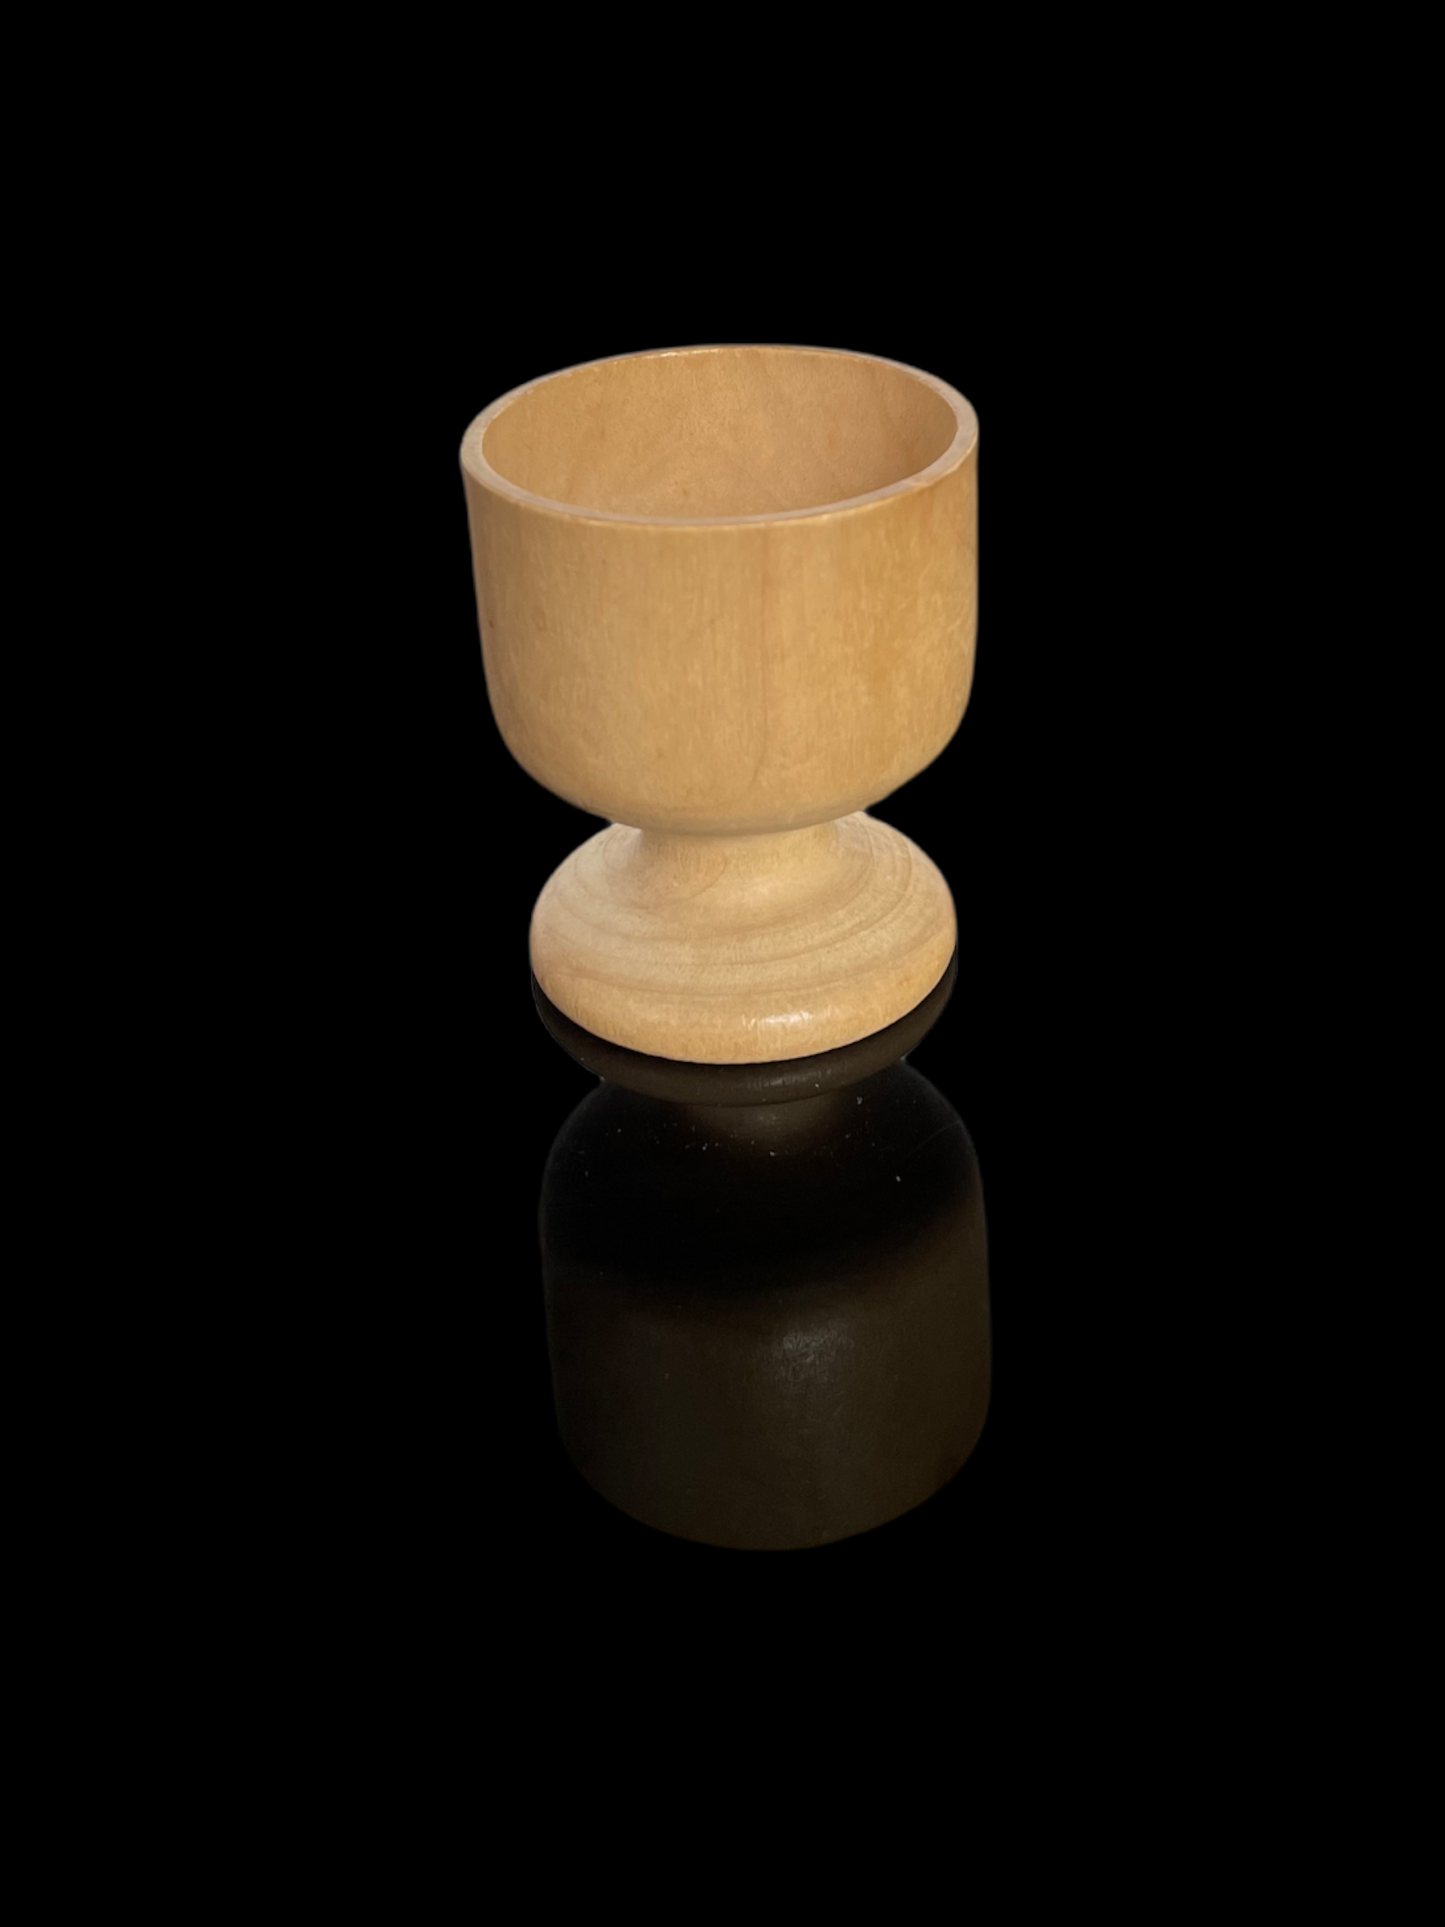 Loose Parts Montessori Wooden Cups Sensory bin Tools - HAPPY GUMNUT